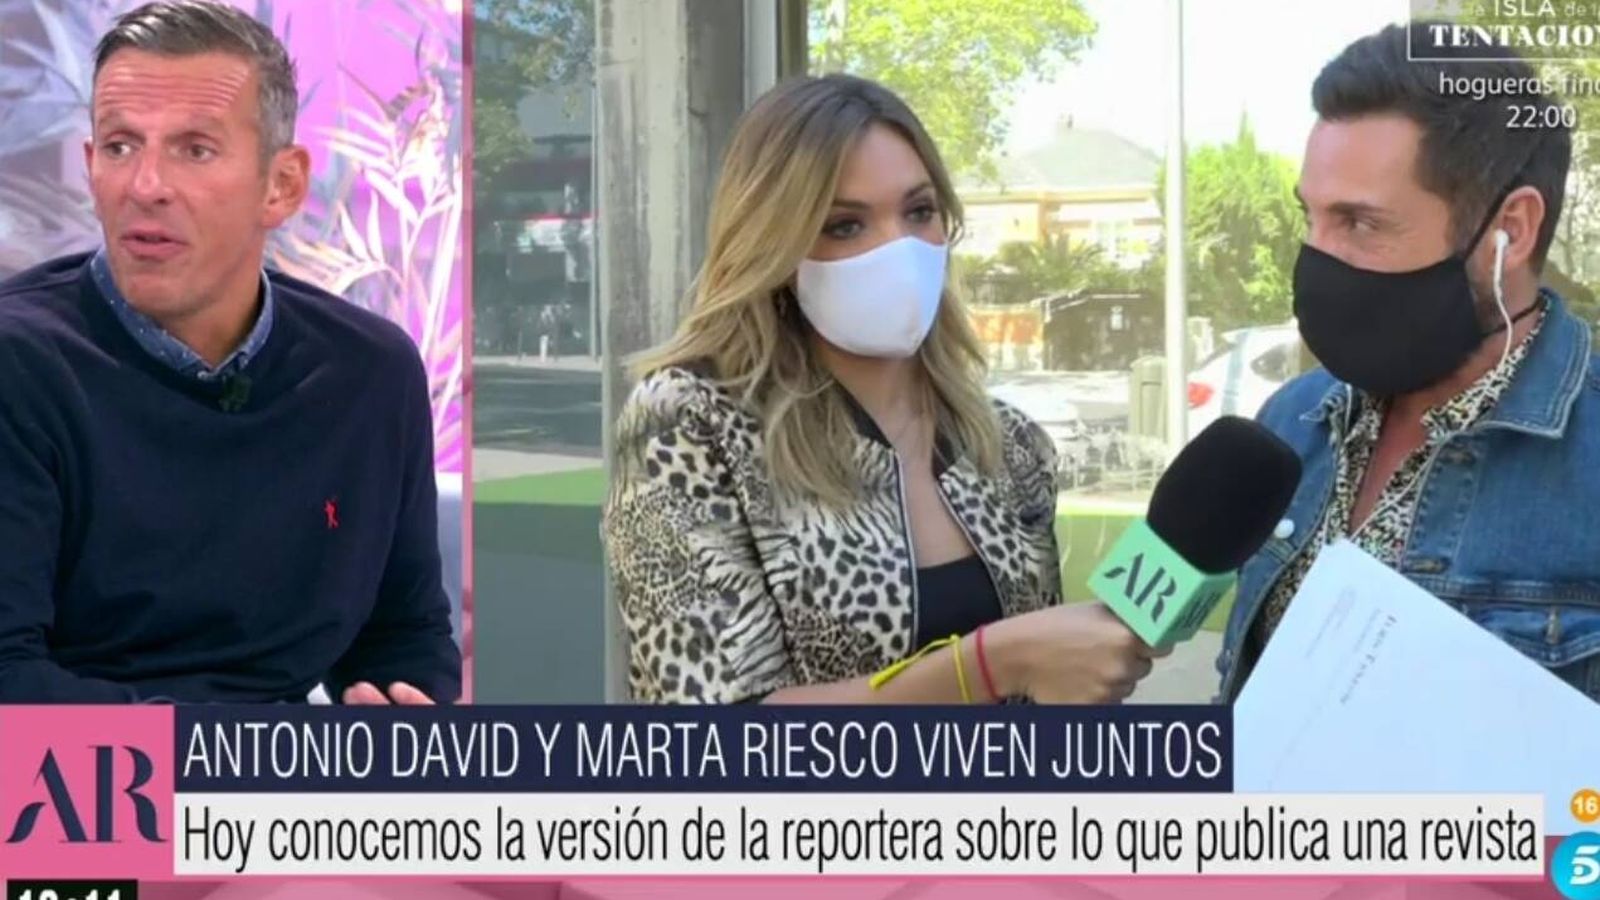 Antonio David Flores i Marta Riesco tenen un pacte secret